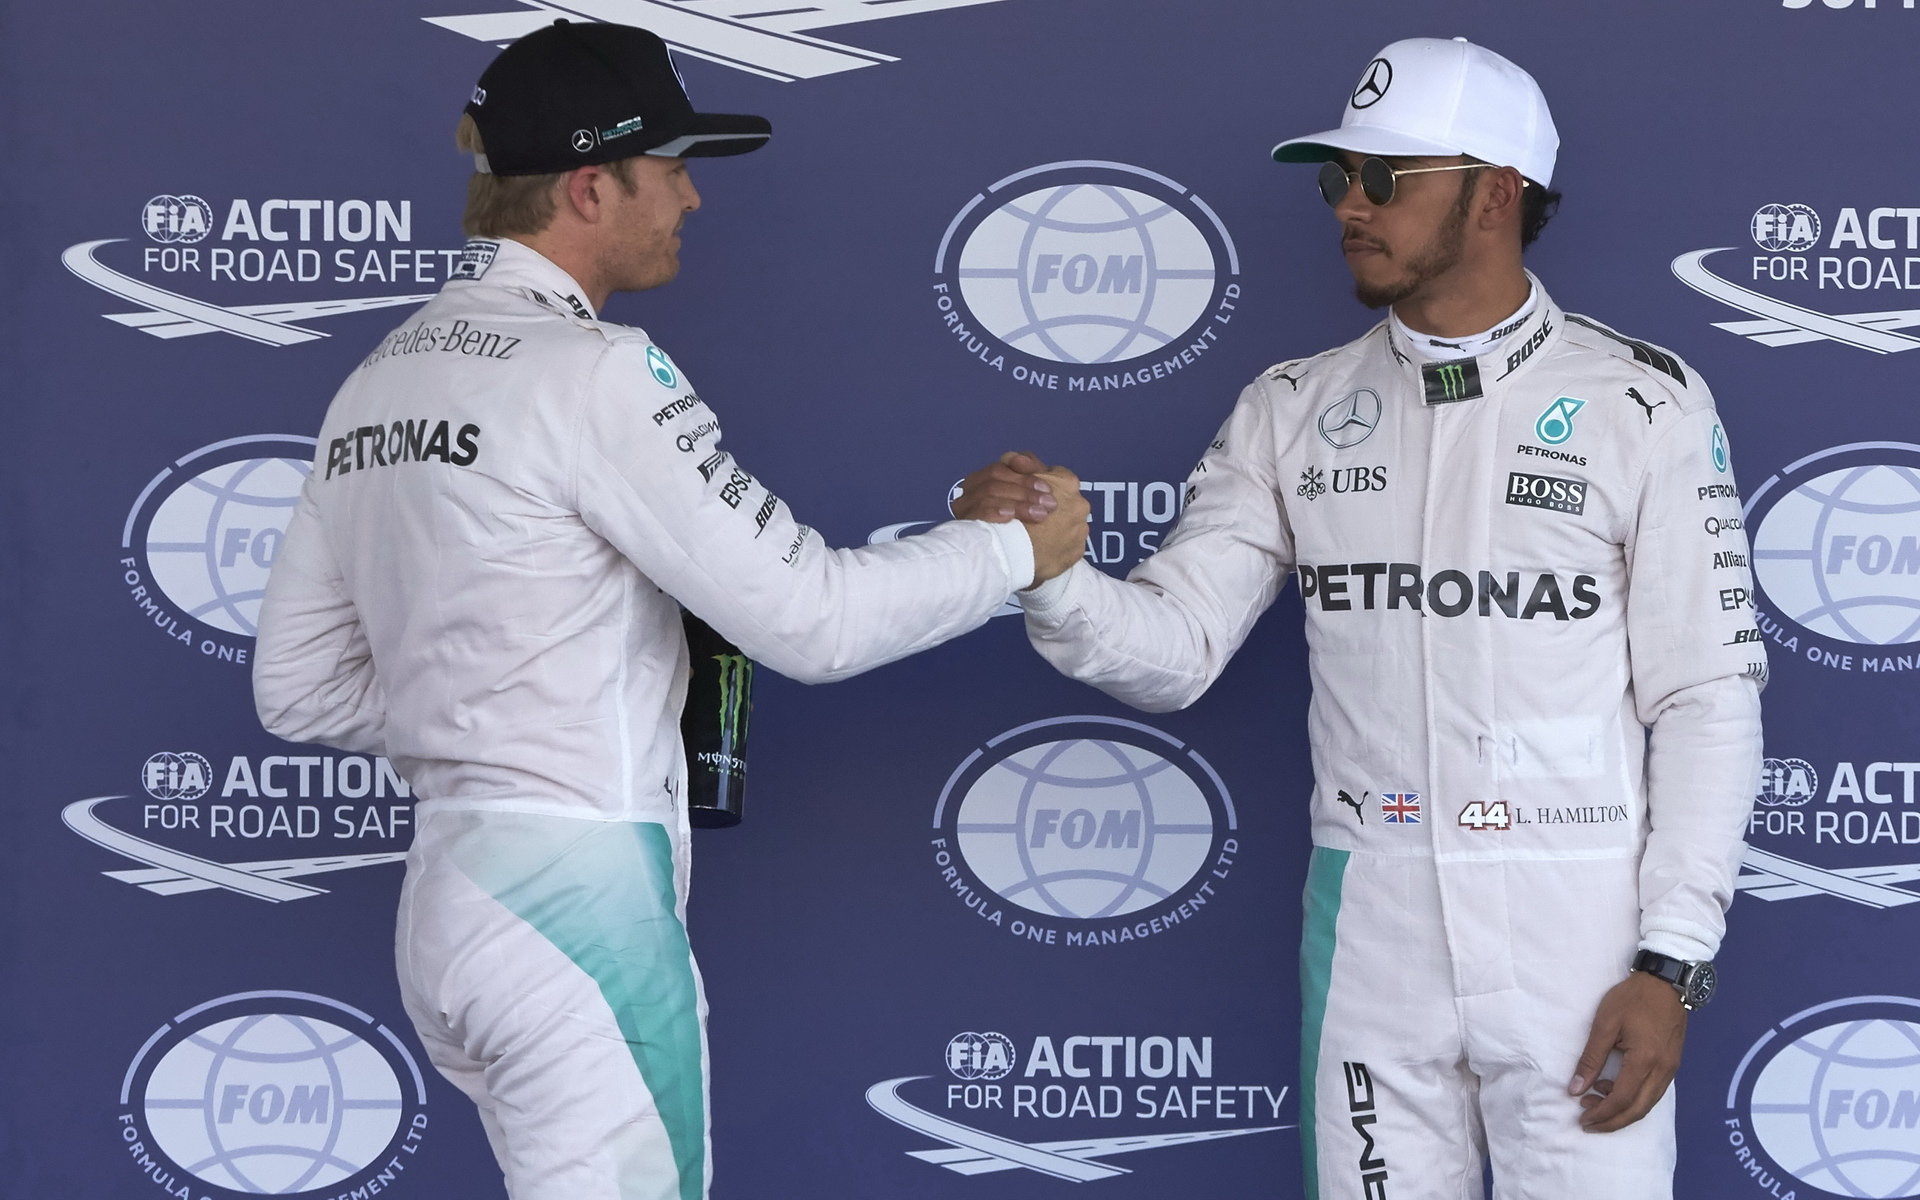 Nico Rosberg si plácá se svým týmovým kolegou Lewisem Hamiltonem